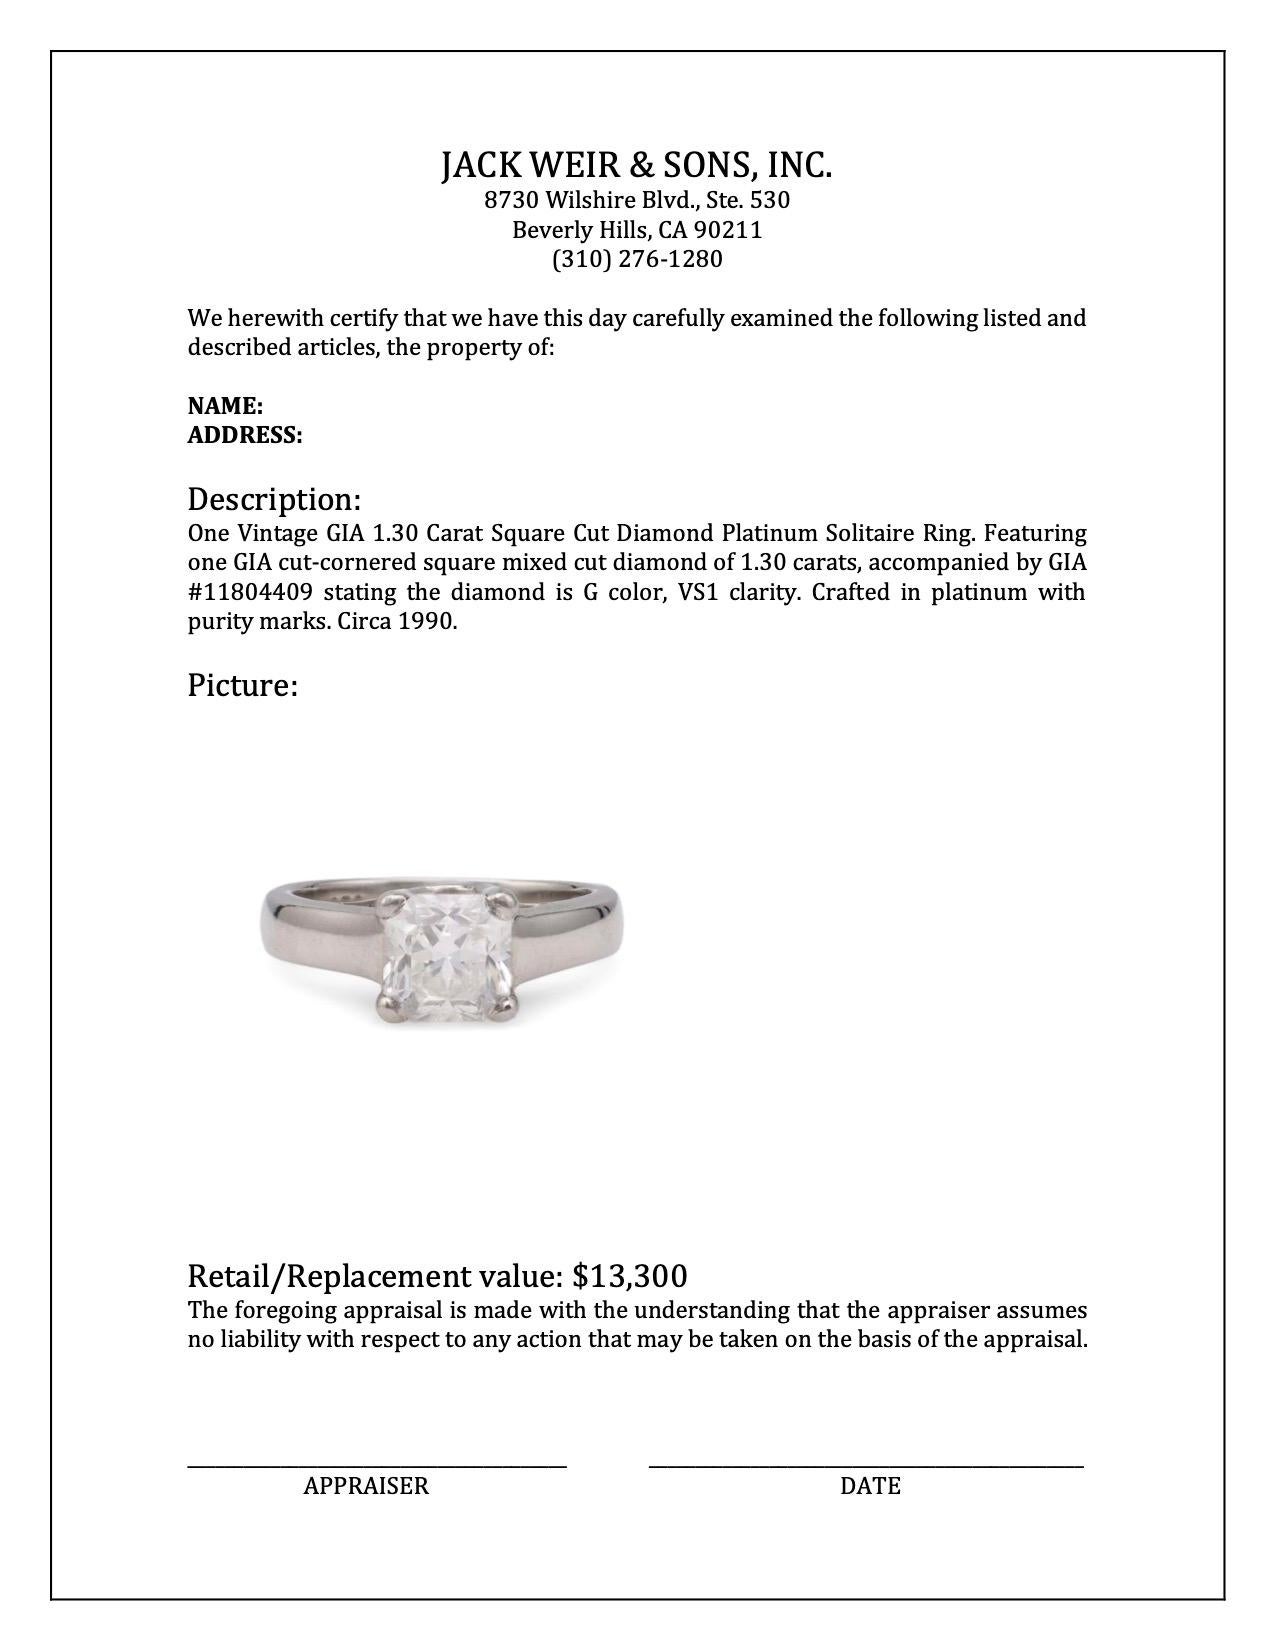 Vintage GIA 1.30 Carat Square Cut Diamond Platinum Solitaire Ring For Sale 2